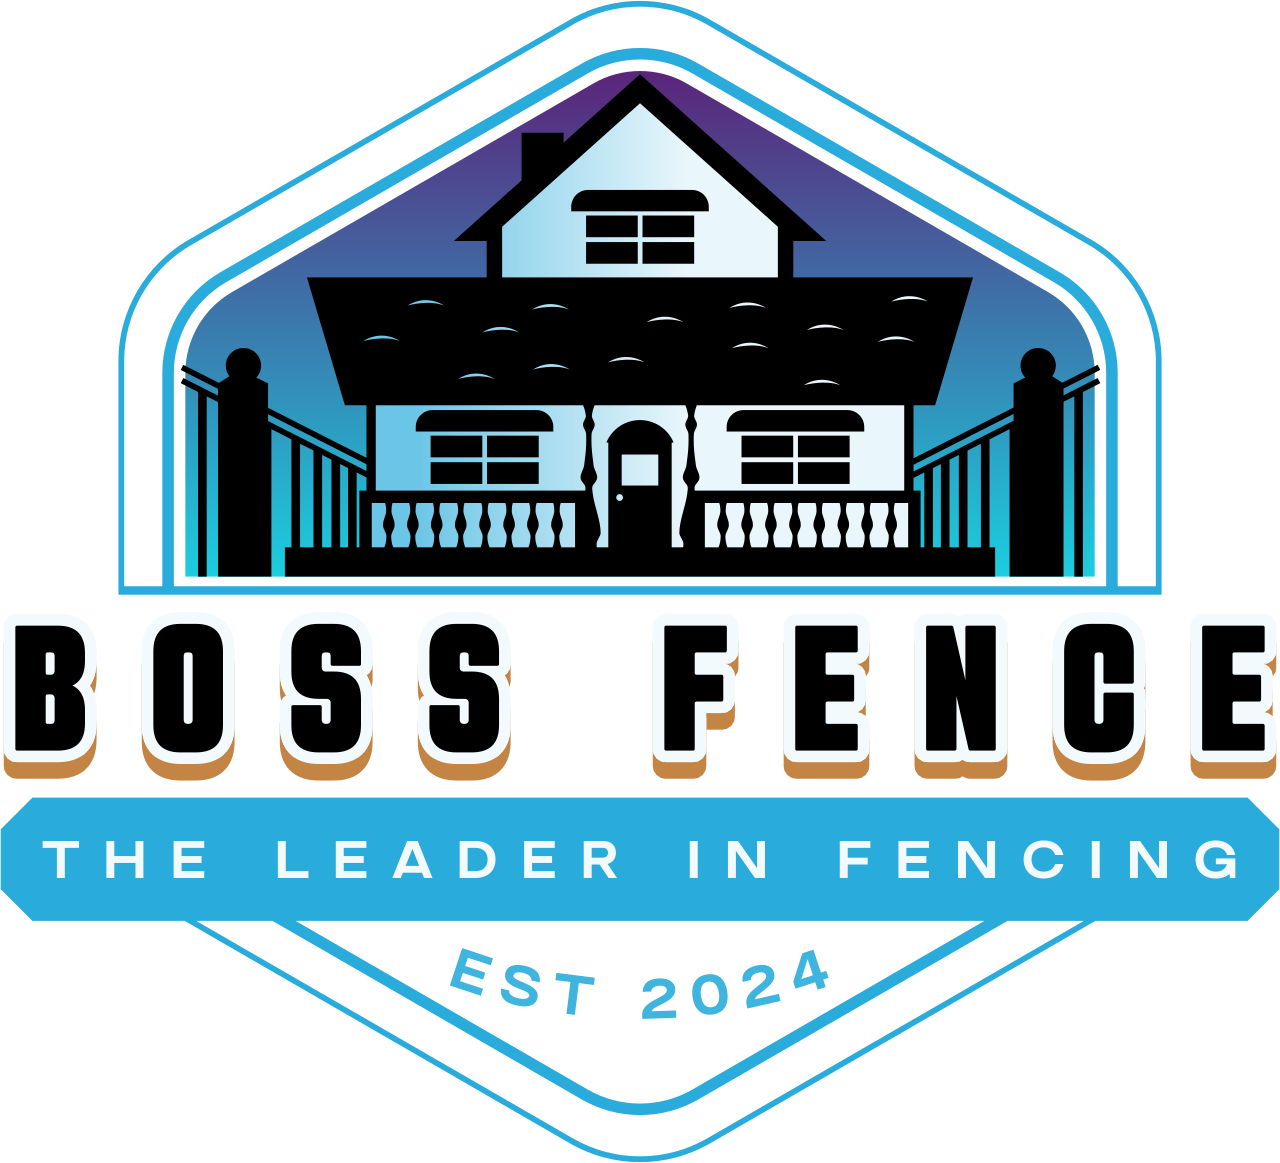 Boss fence's logo